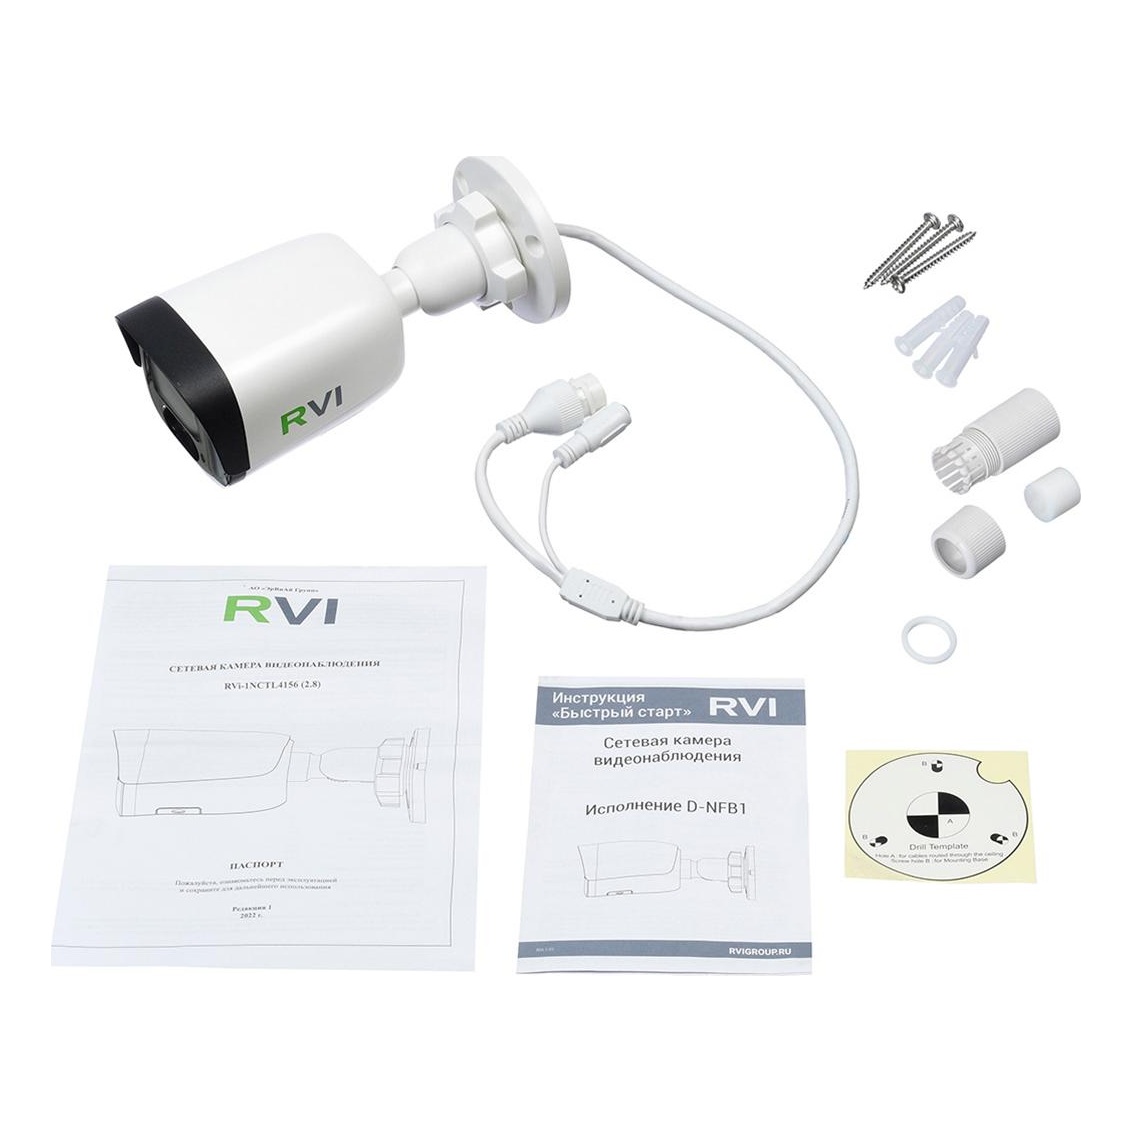 RVi-1NCTL4156 (2.8) white IP видеокамера